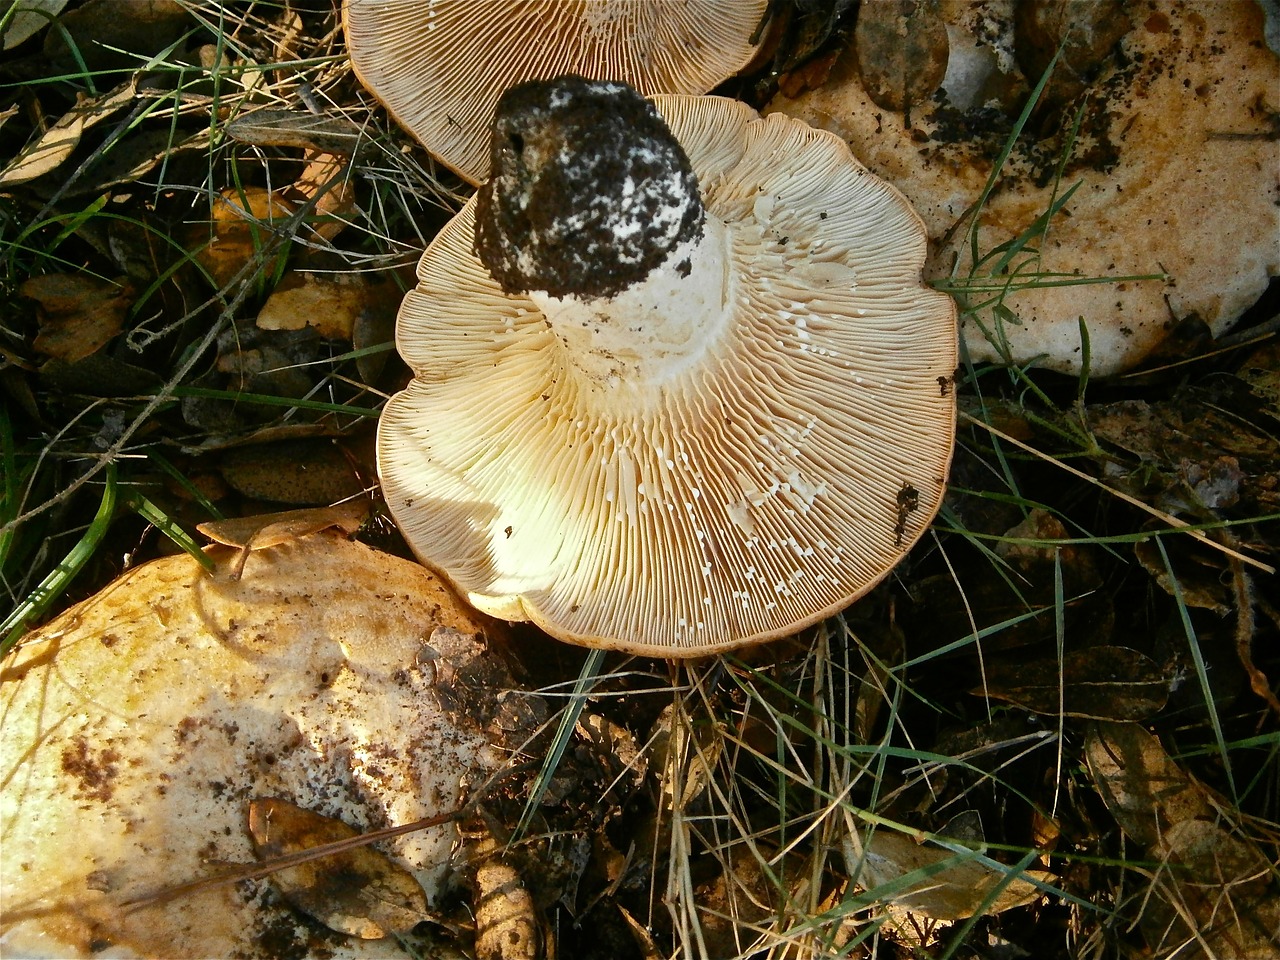 mushrooms lactarius fungi free photo